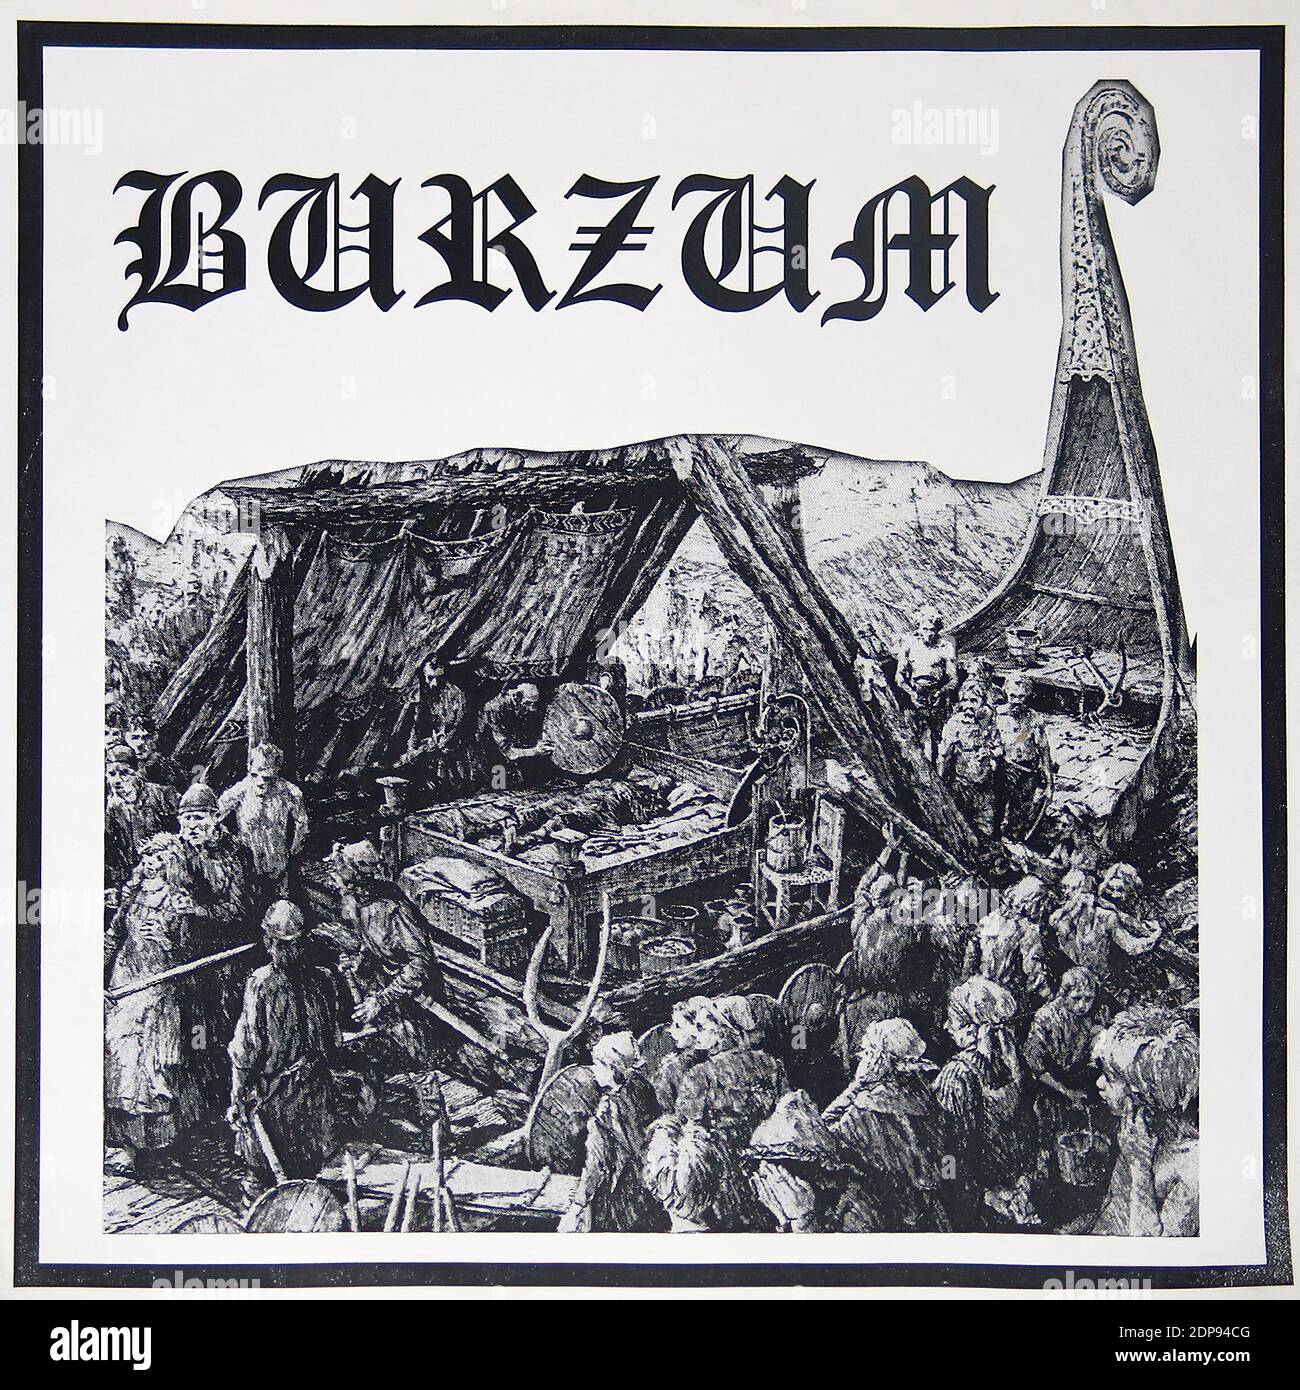 Burzum Demo LP Vynil Maniac records 0 1992  - Vintage Vinyl Record Cover Stock Photo